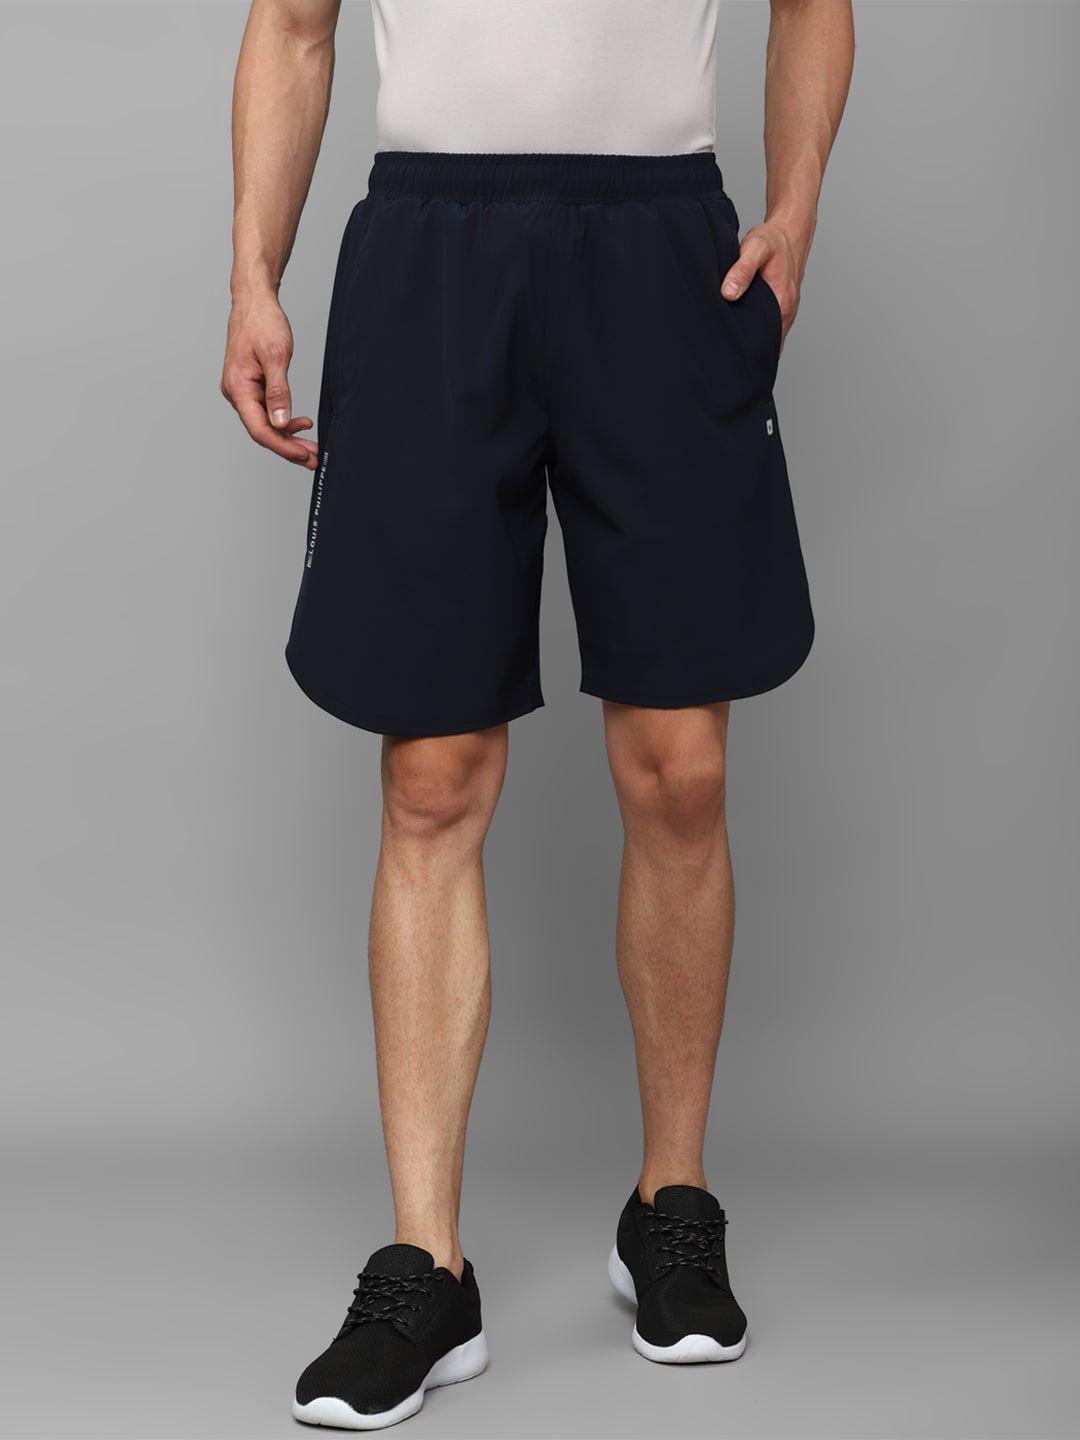 louis philippe men slim fit mid-rise shorts